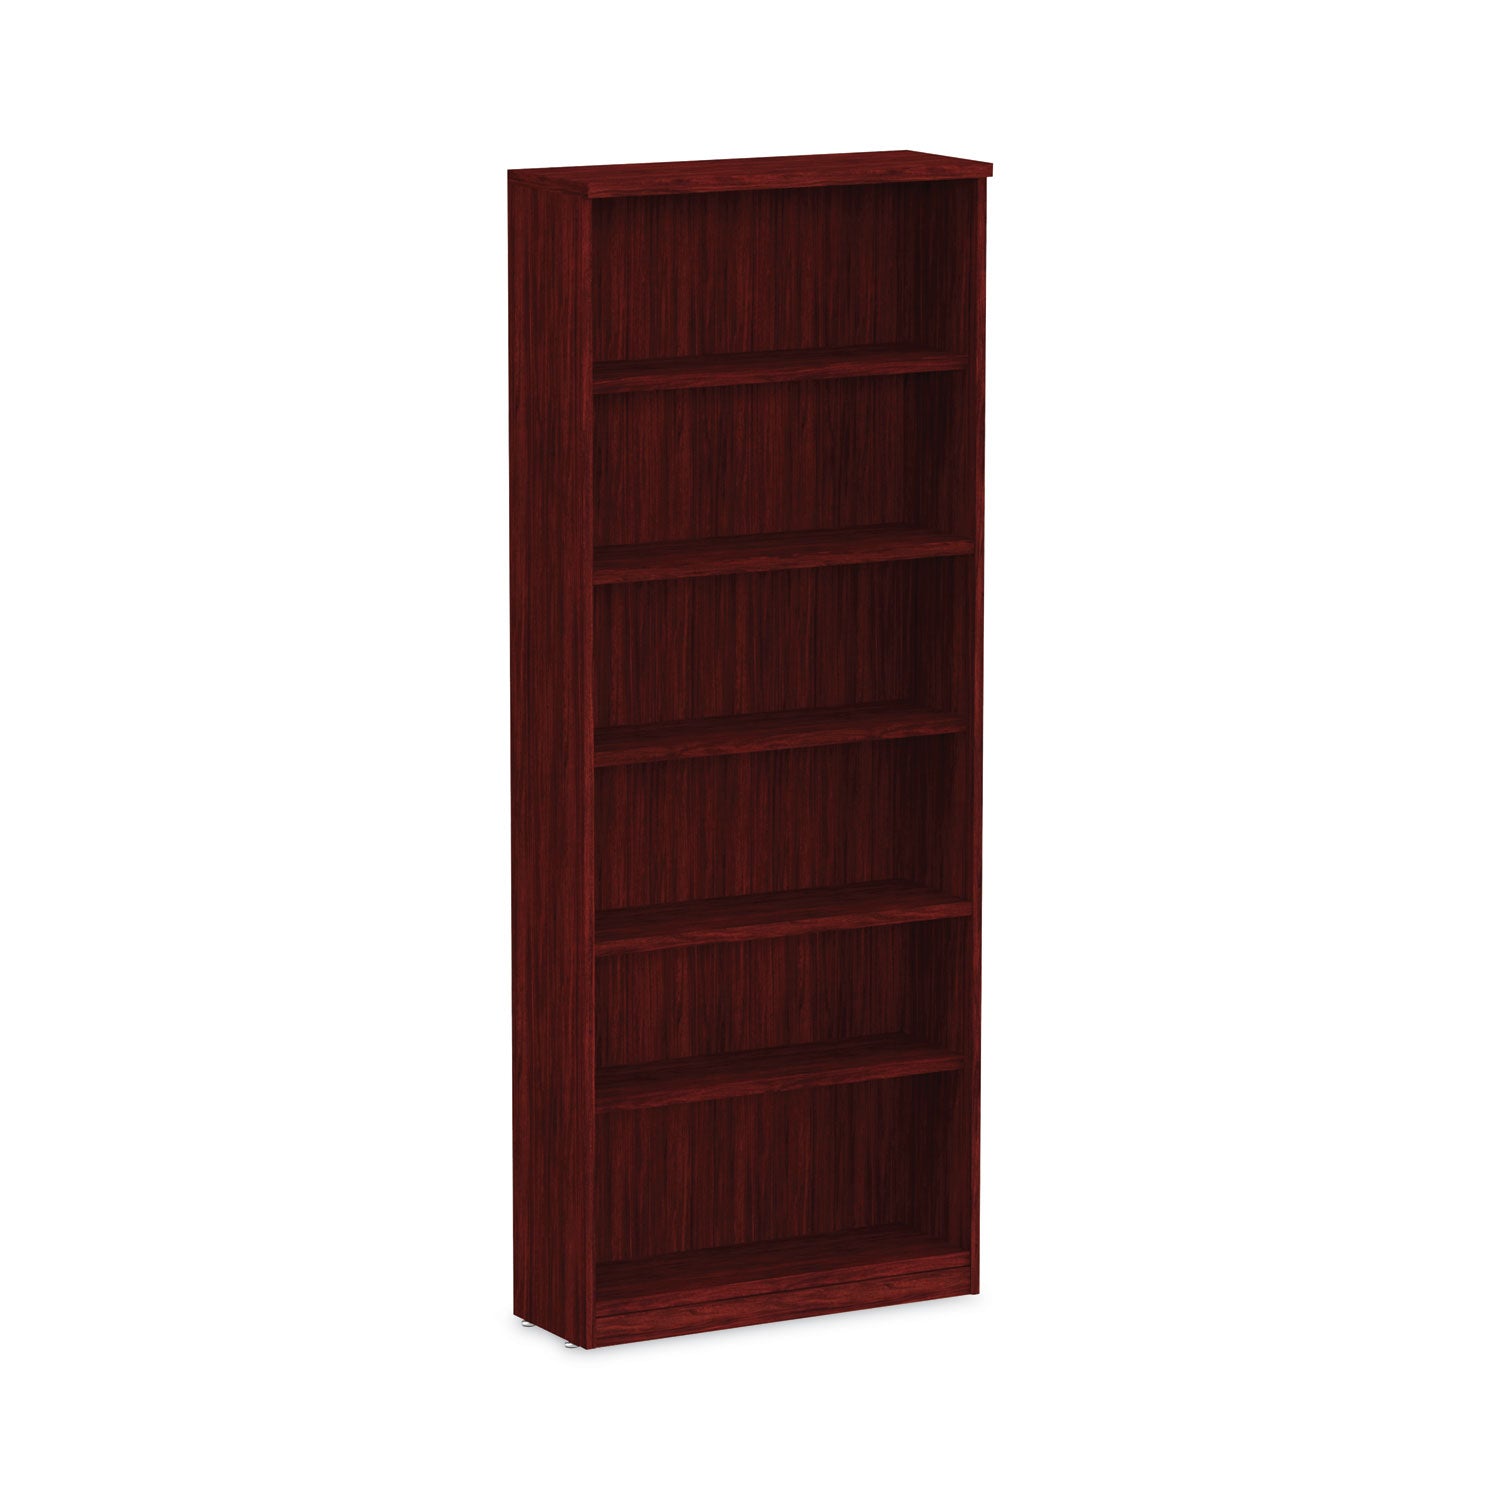 Alera Valencia Series Bookcase, Six-Shelf, 31.75w x 14d x 80.25h, Mahogany - 